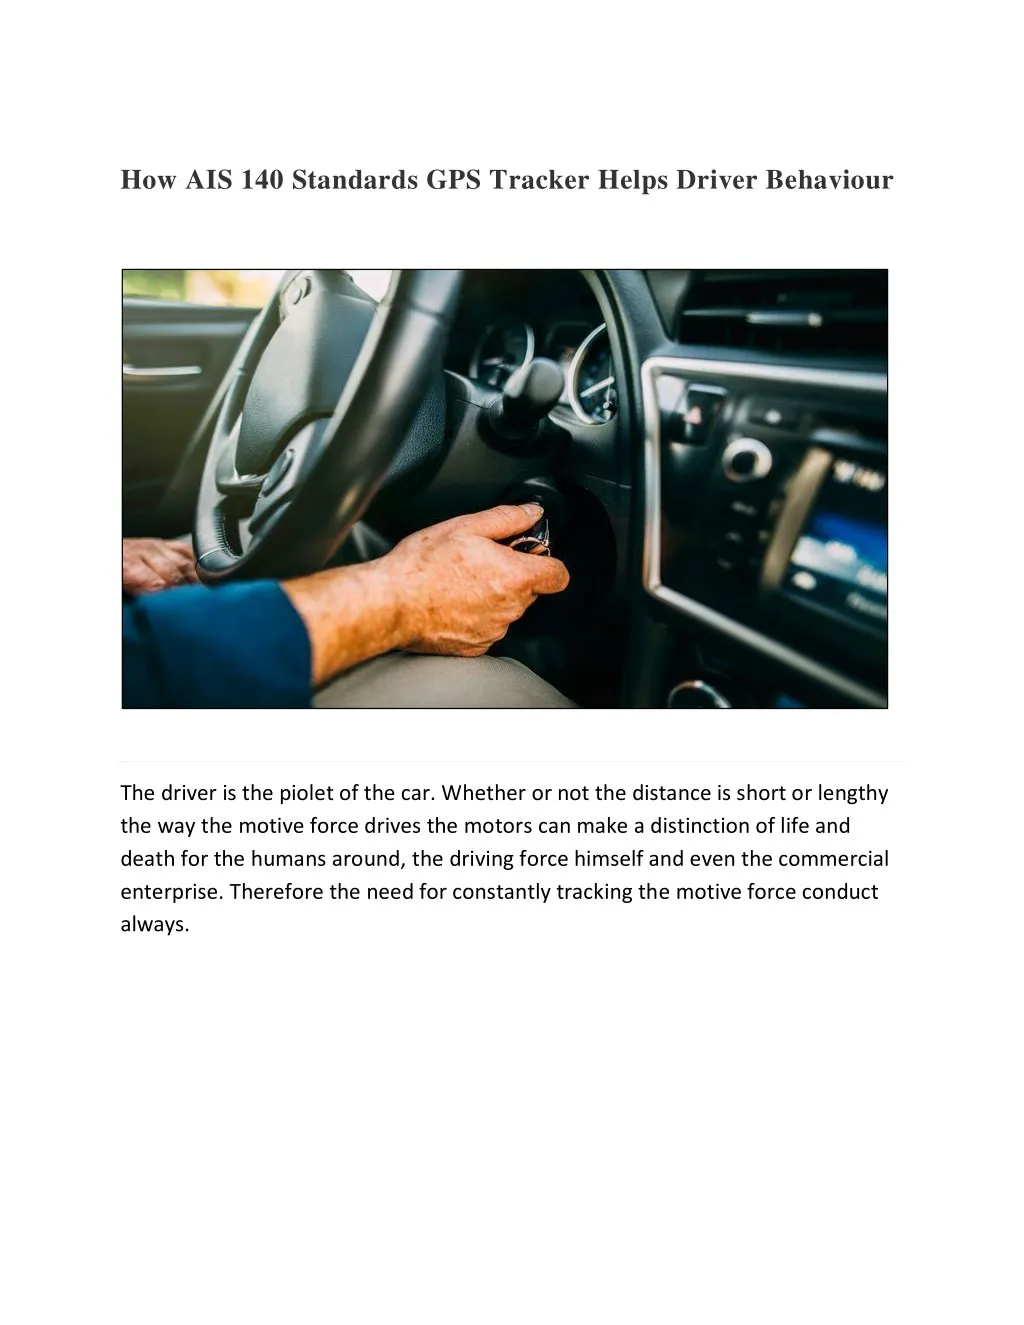 how ais 140 standards gps tracker helps driver